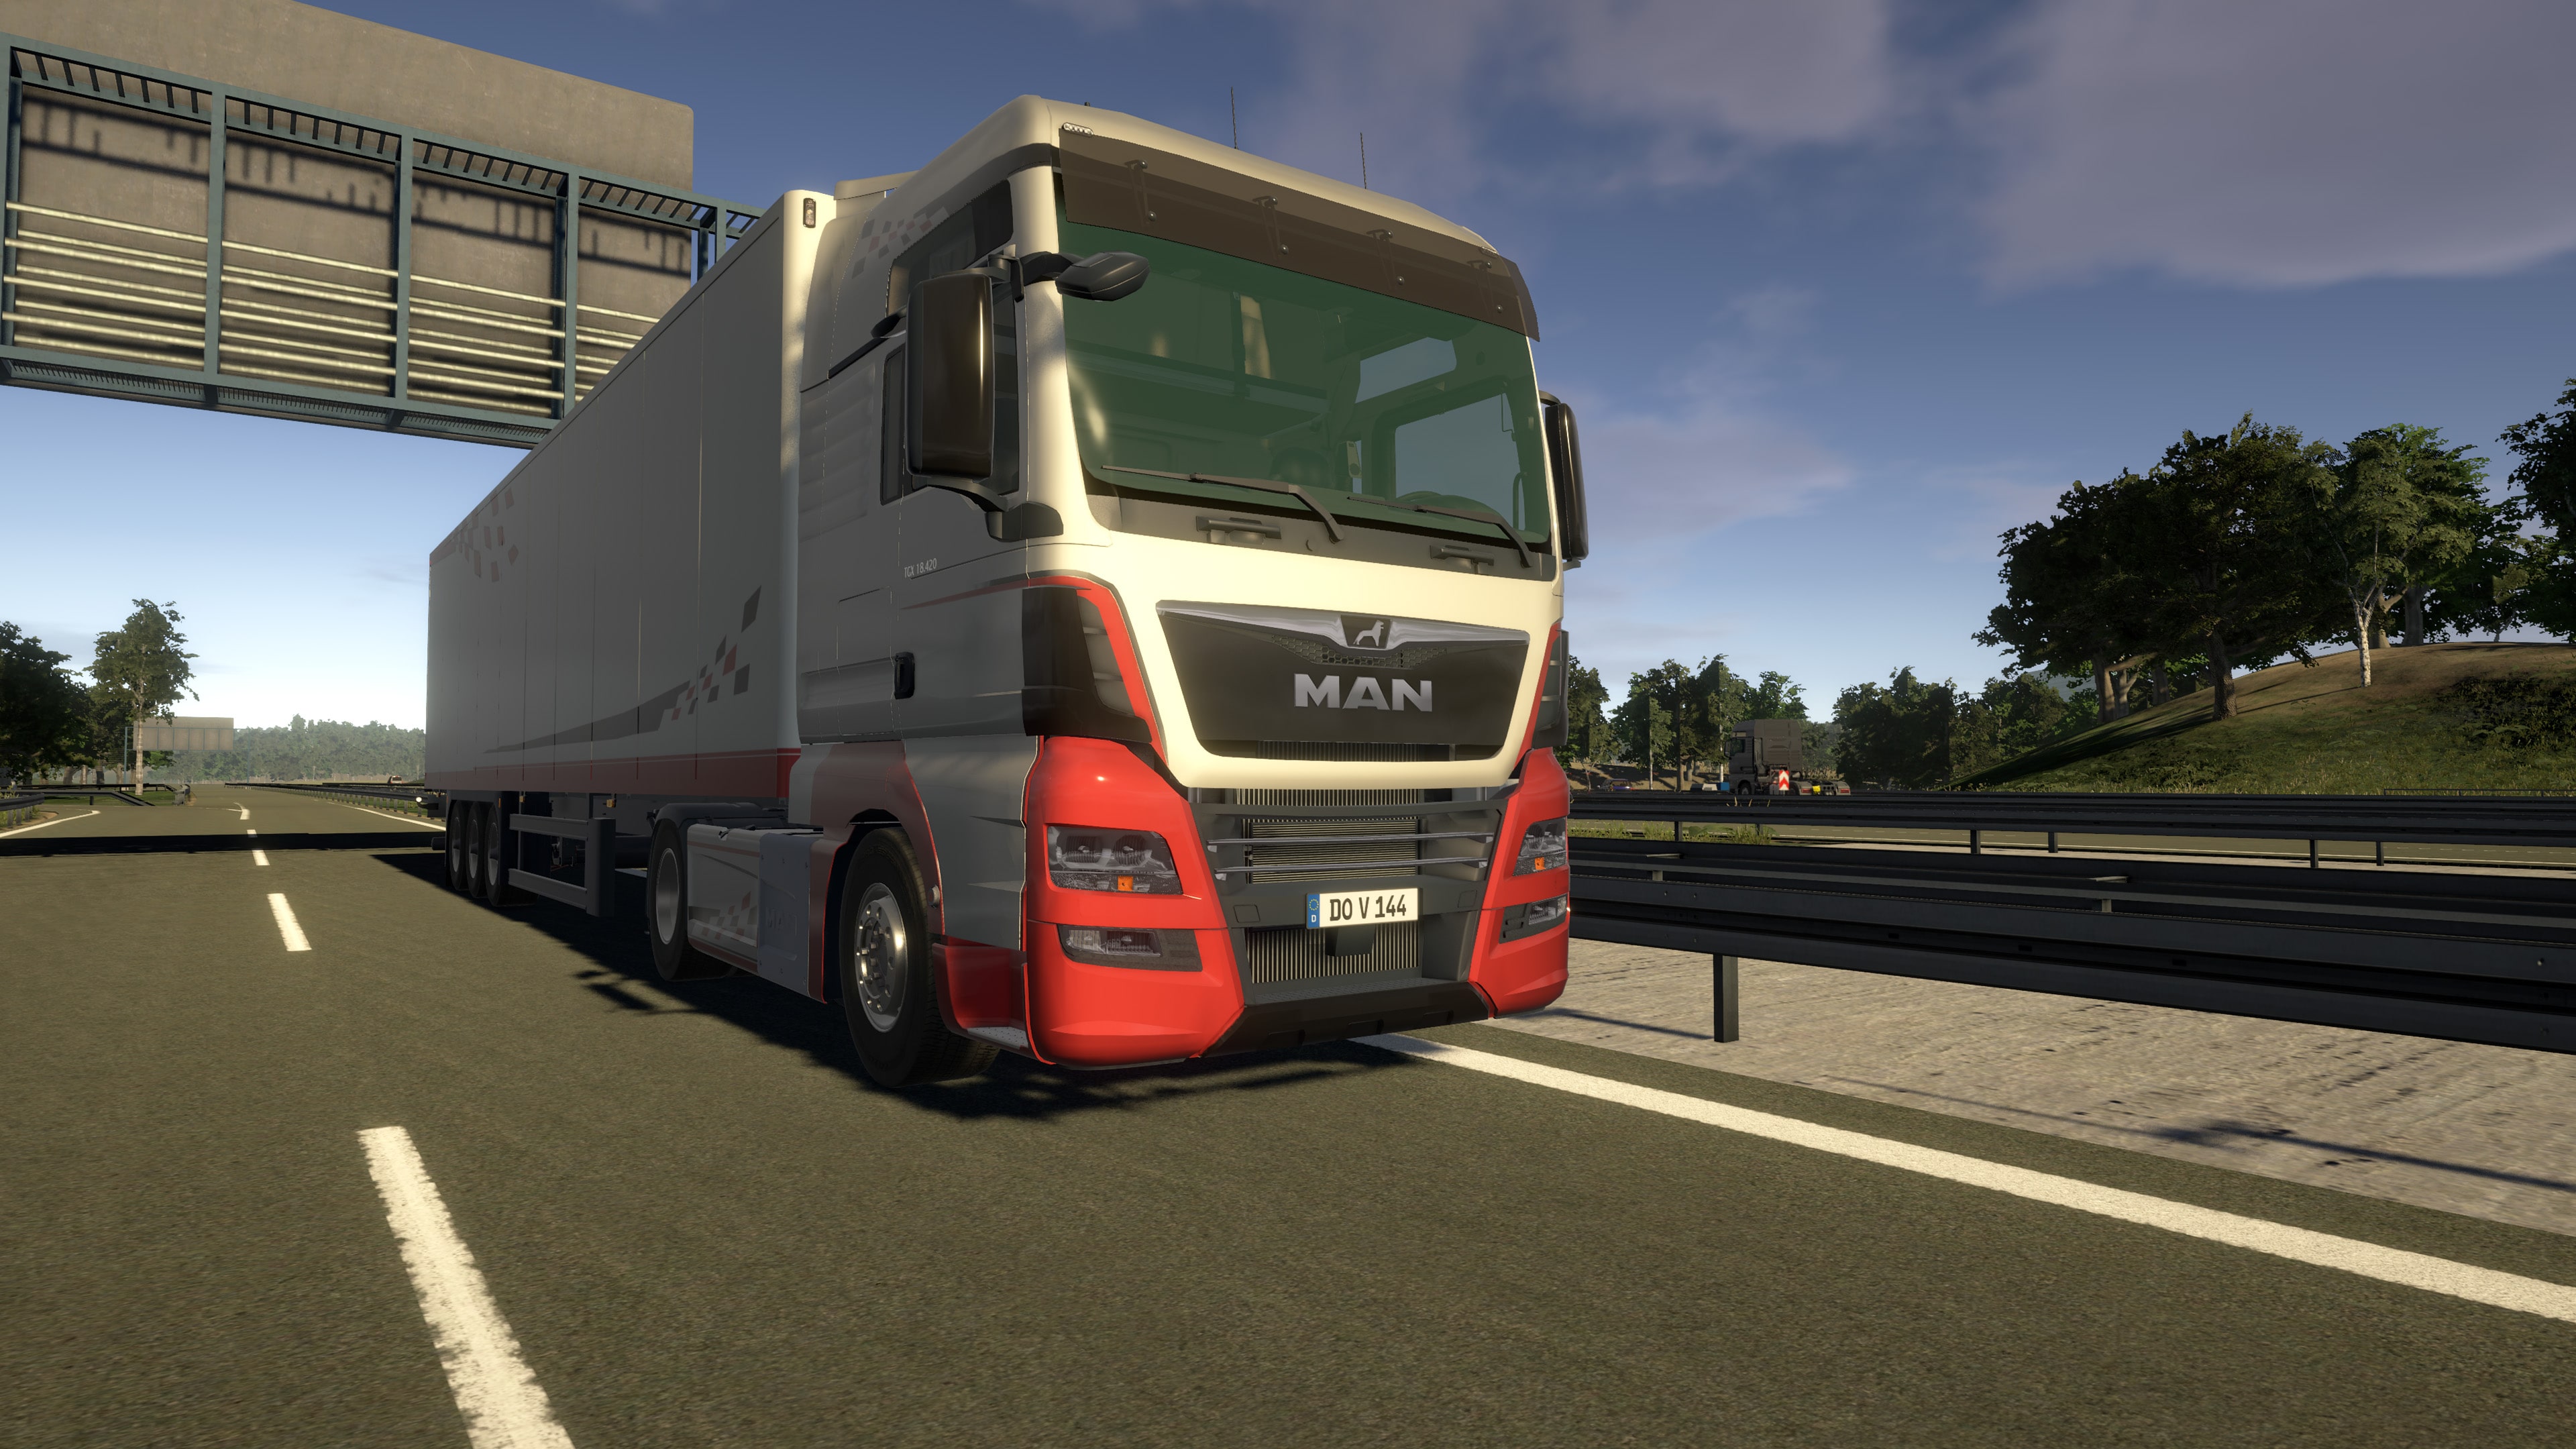 PS5 on the road Truck-Simulator in Baden-Württemberg - Karlsdorf